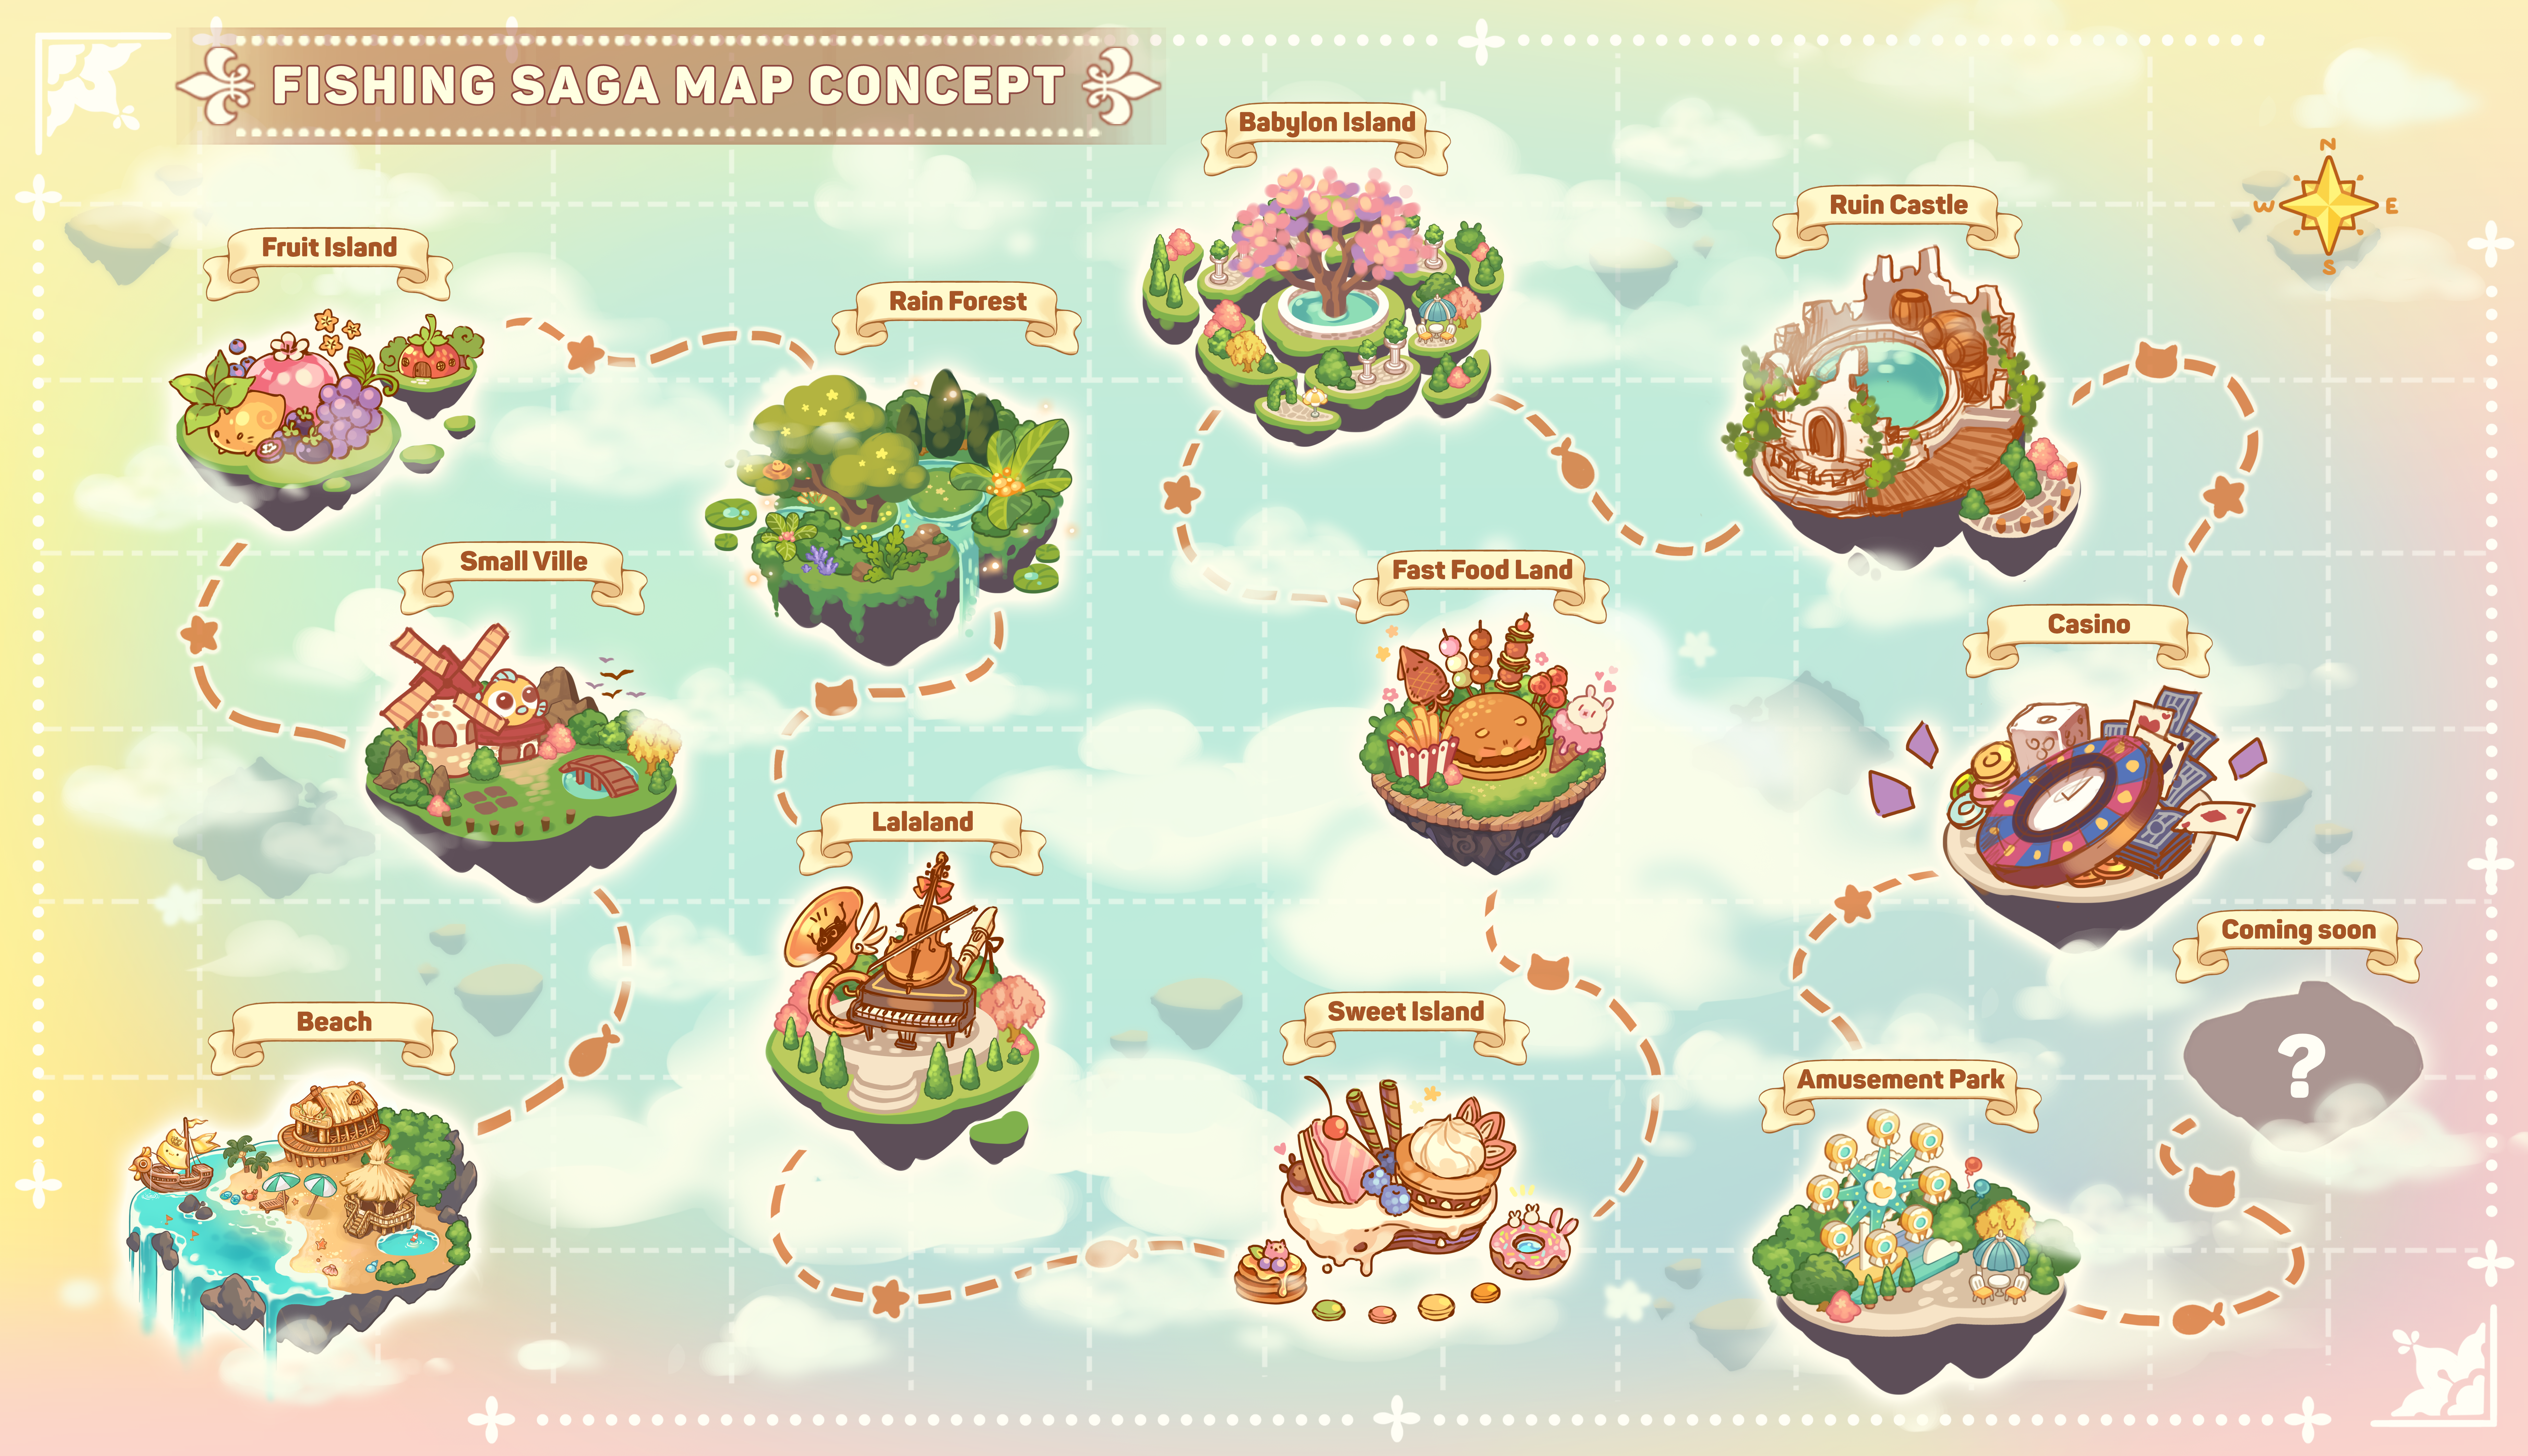 Fishing_Saga_Map_Concept.png